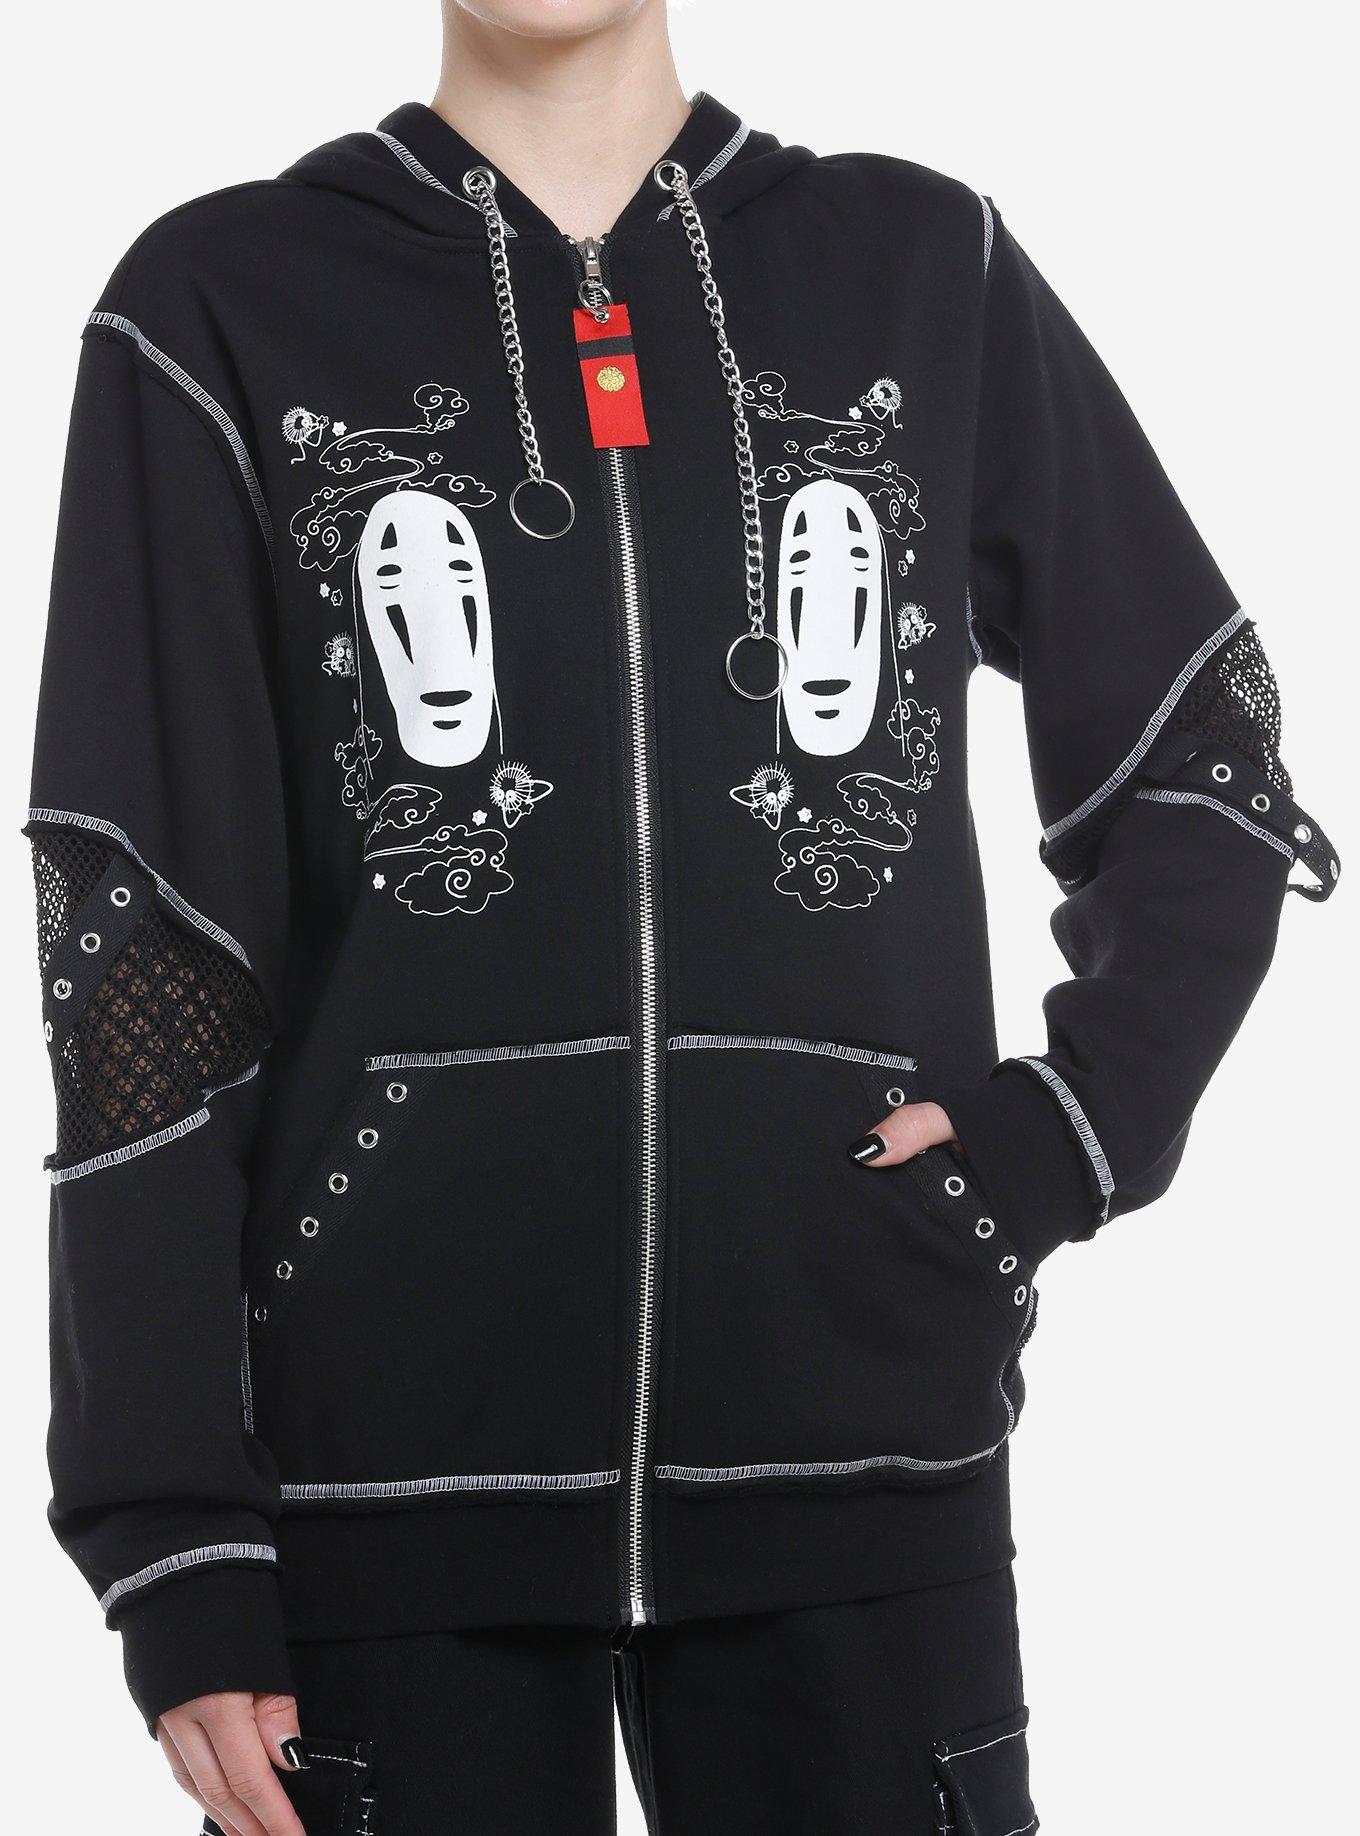 Spirited Away Zip Hoodie Jackets merch, clothing & apparel - Anime Ape